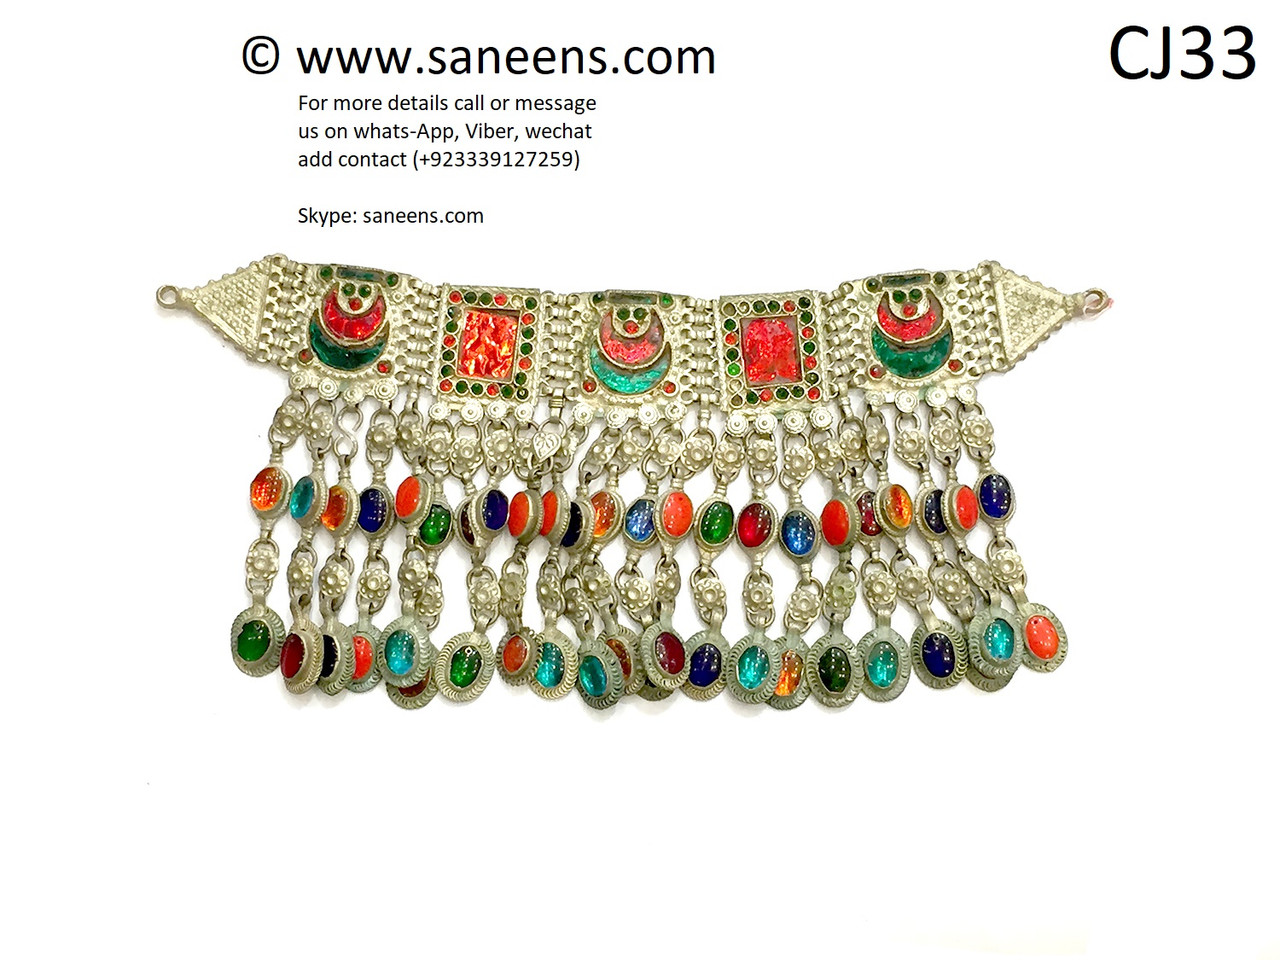 New henna night boho fashion choker online - Saneens Online Store